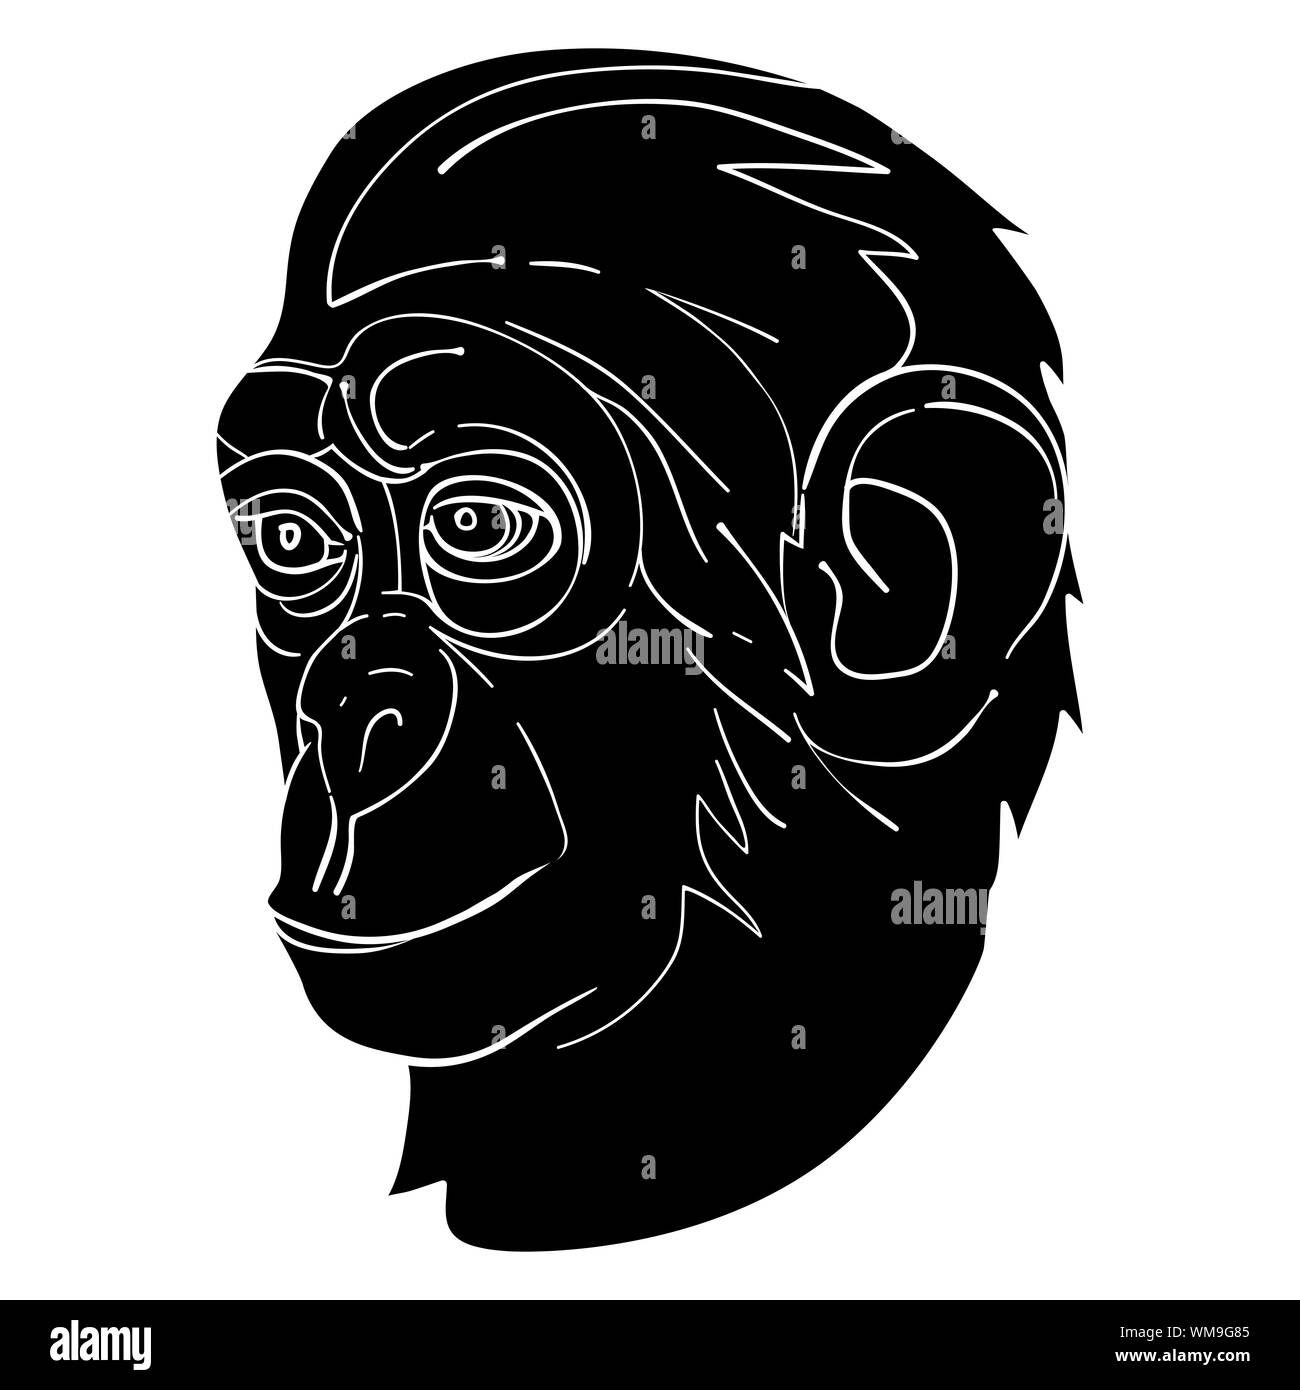 Monkey head avatar, Chinese zodiac sign, black silhouette isolated on white Stock Photo